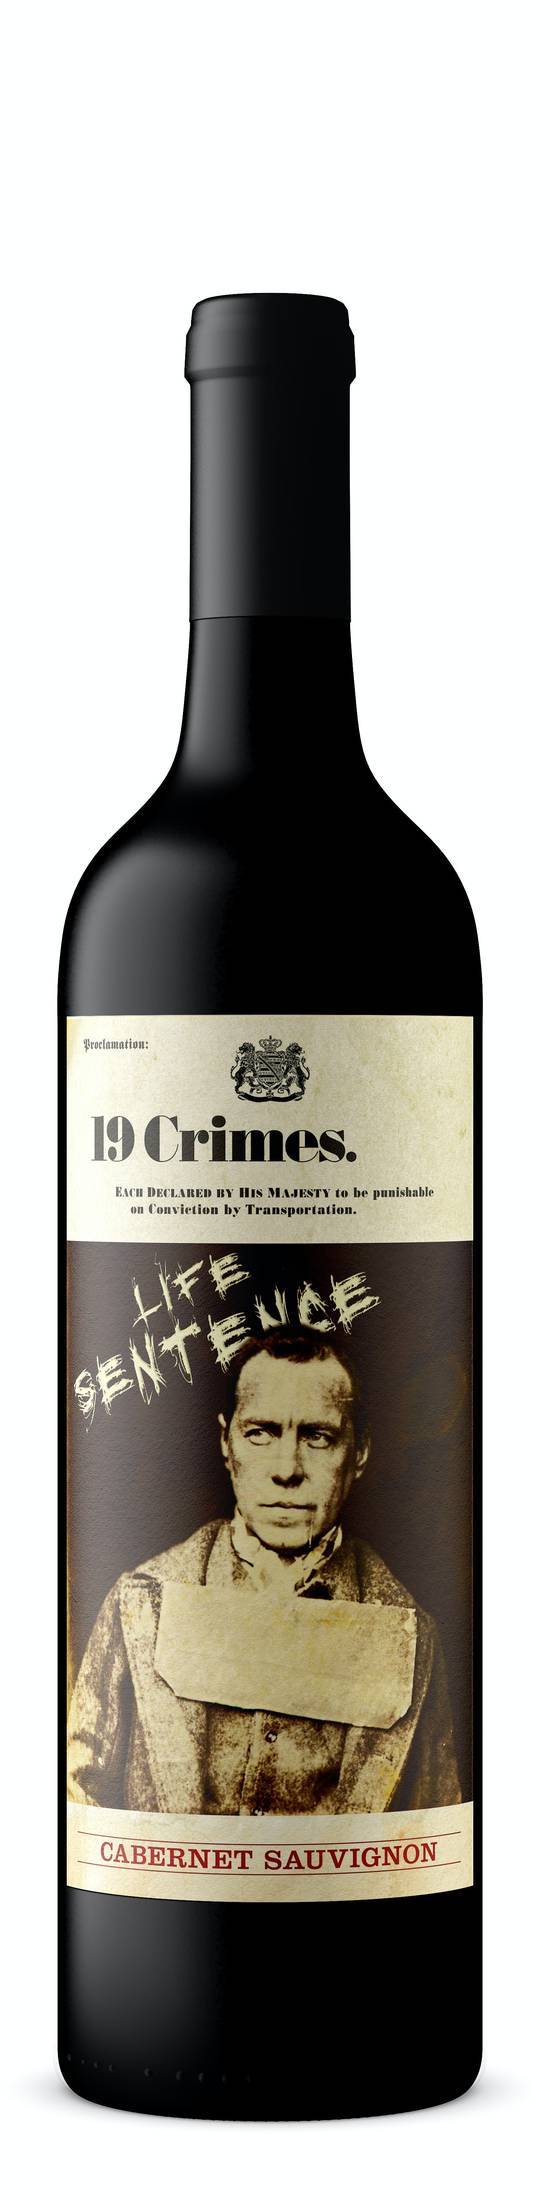 19 Crimes Life Sentence Cabernet Sauvignon (750ml bottle)